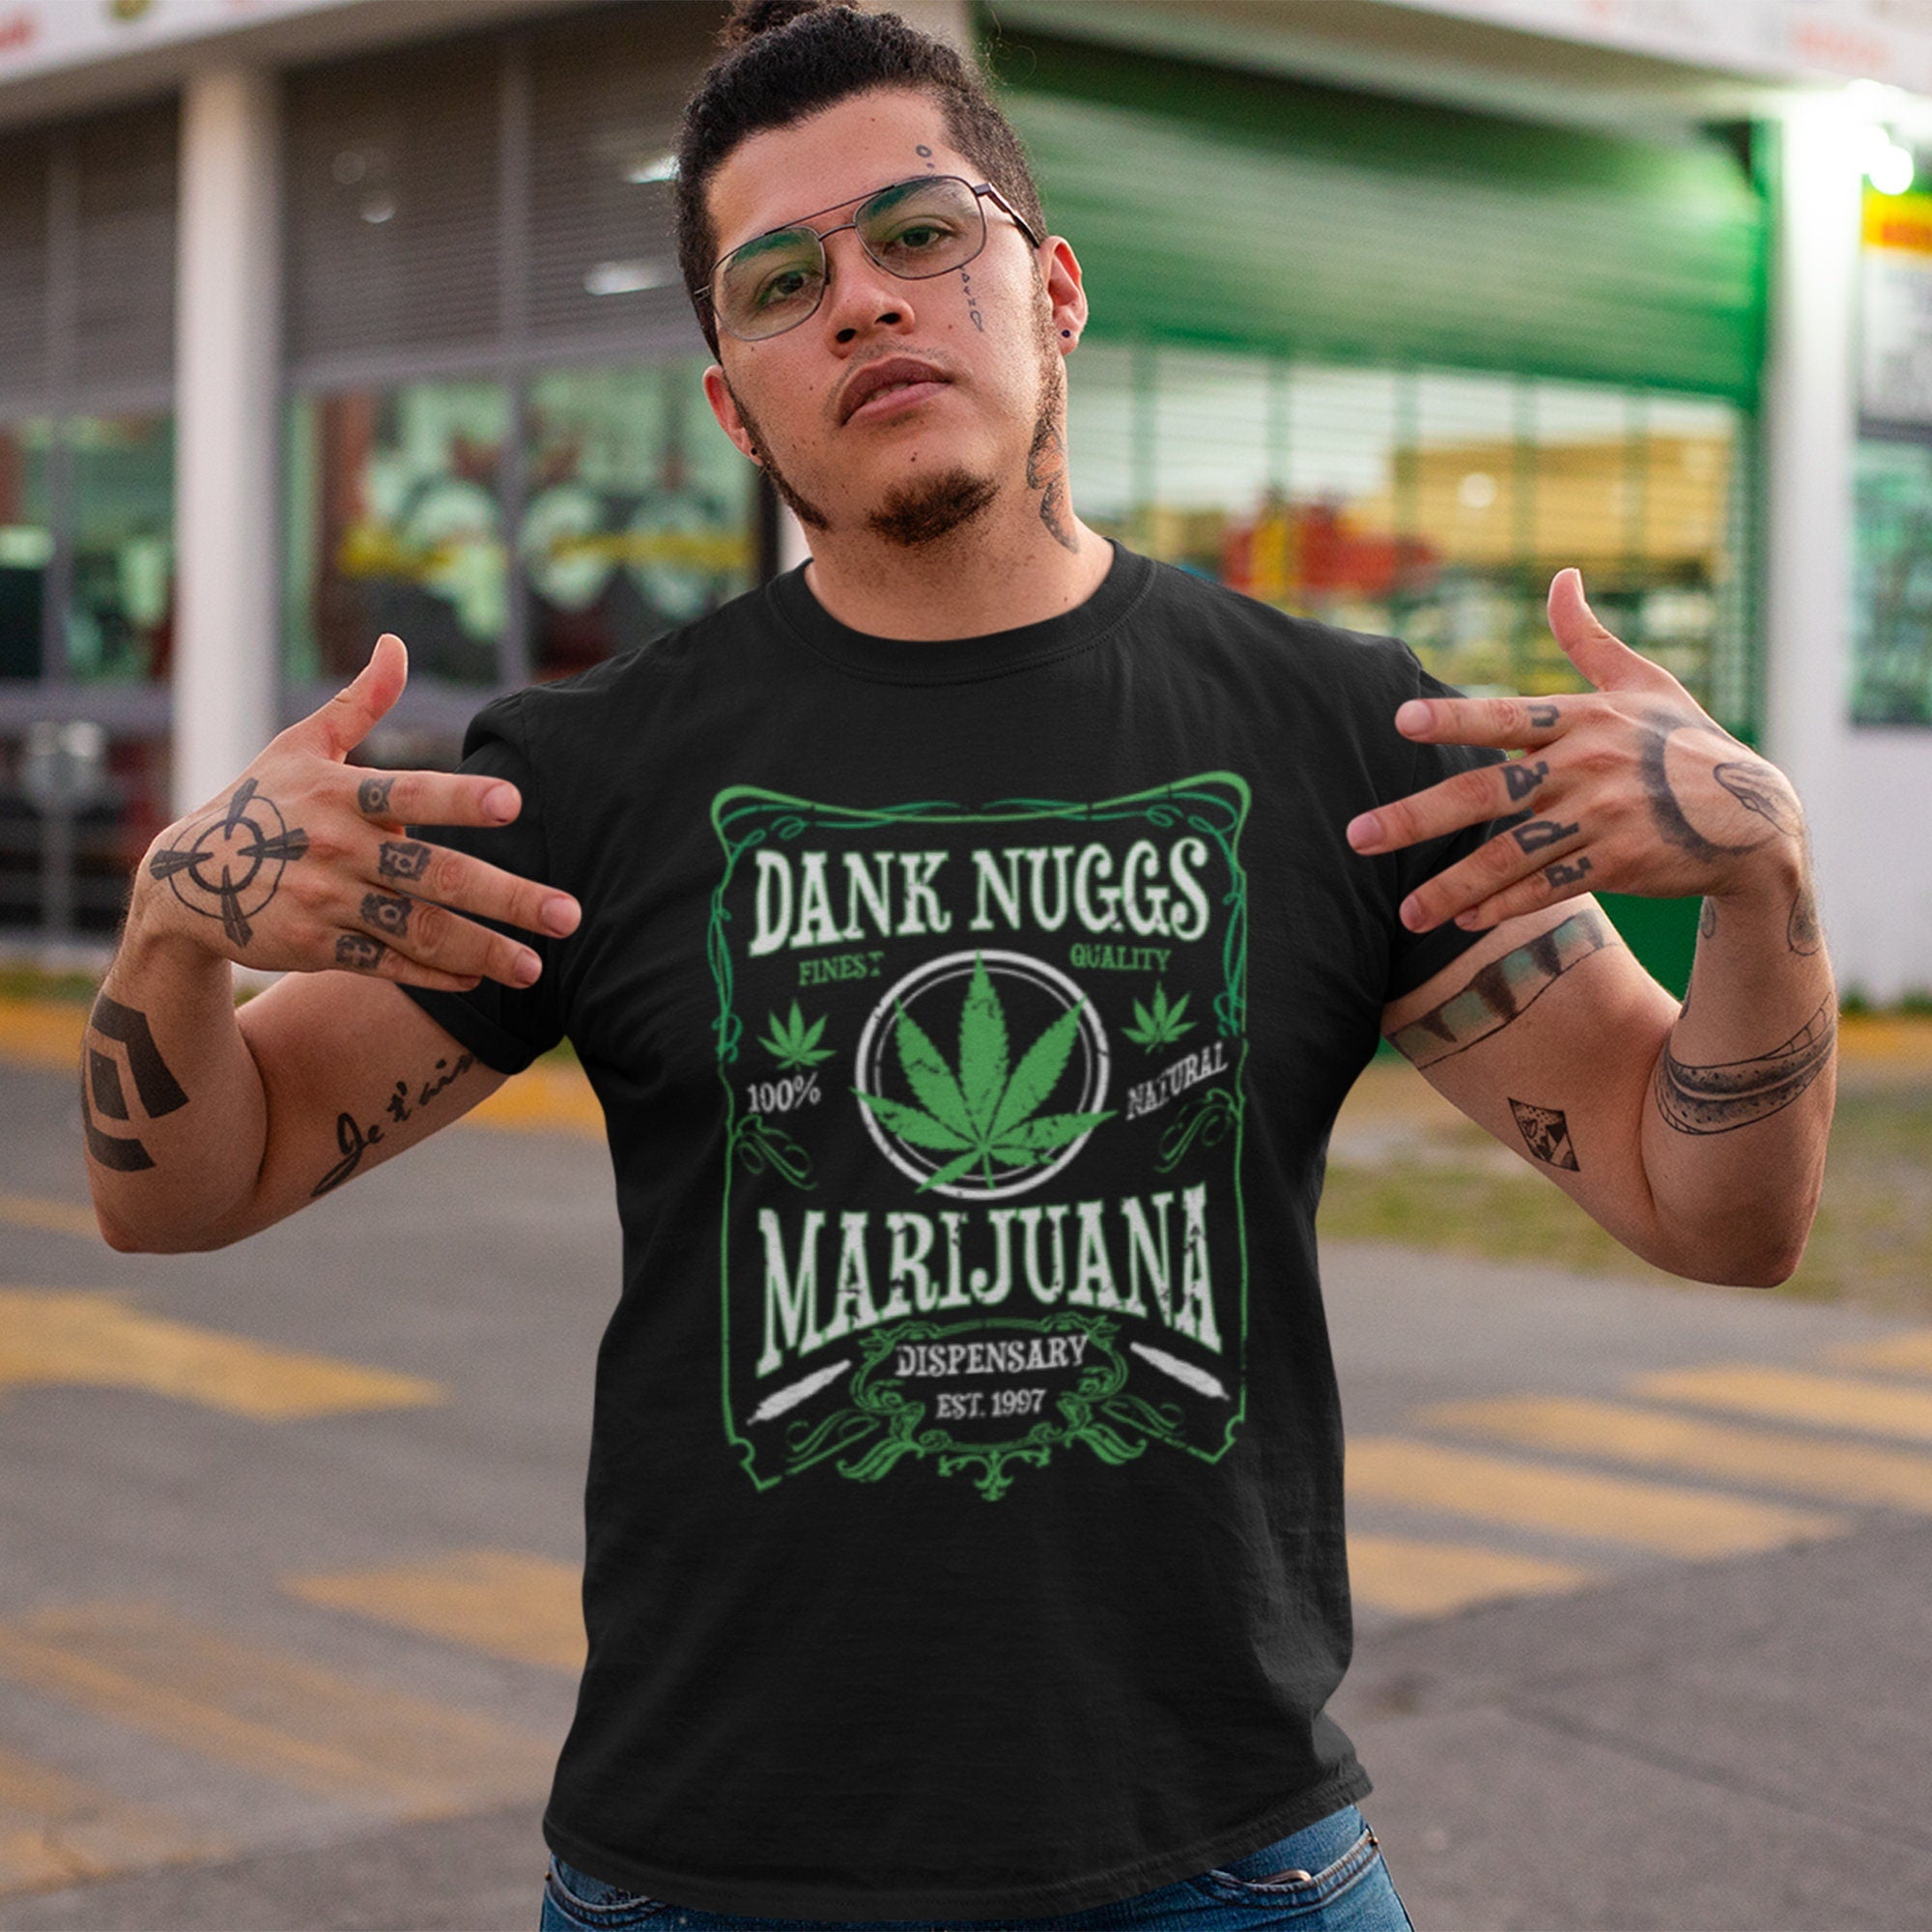 Weed Shirt, Dank Nuggs Shirt, Cannabis Funny Shirt,  Weed-420 Shirt, Cannabis Shirts,  Shirt, Pothead Shirt, Smoke Shirt, Marijuana Shirt - Fastdeliverytees.com